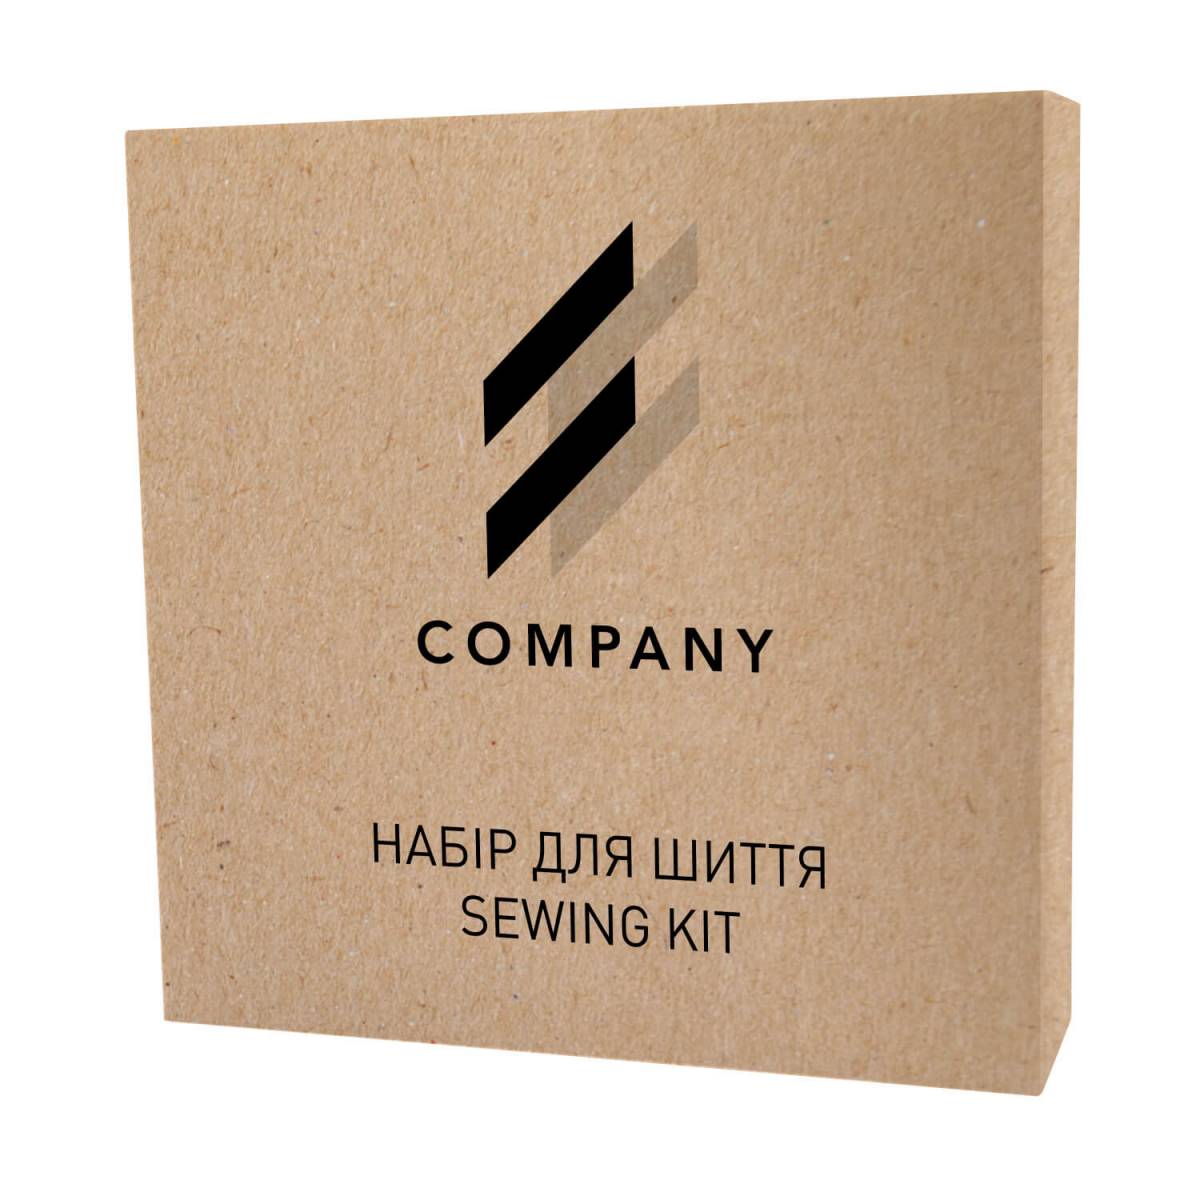 Швейный набор с логотипом заказчика, коробочка из крафт картона Cr1L-SK6 HSG